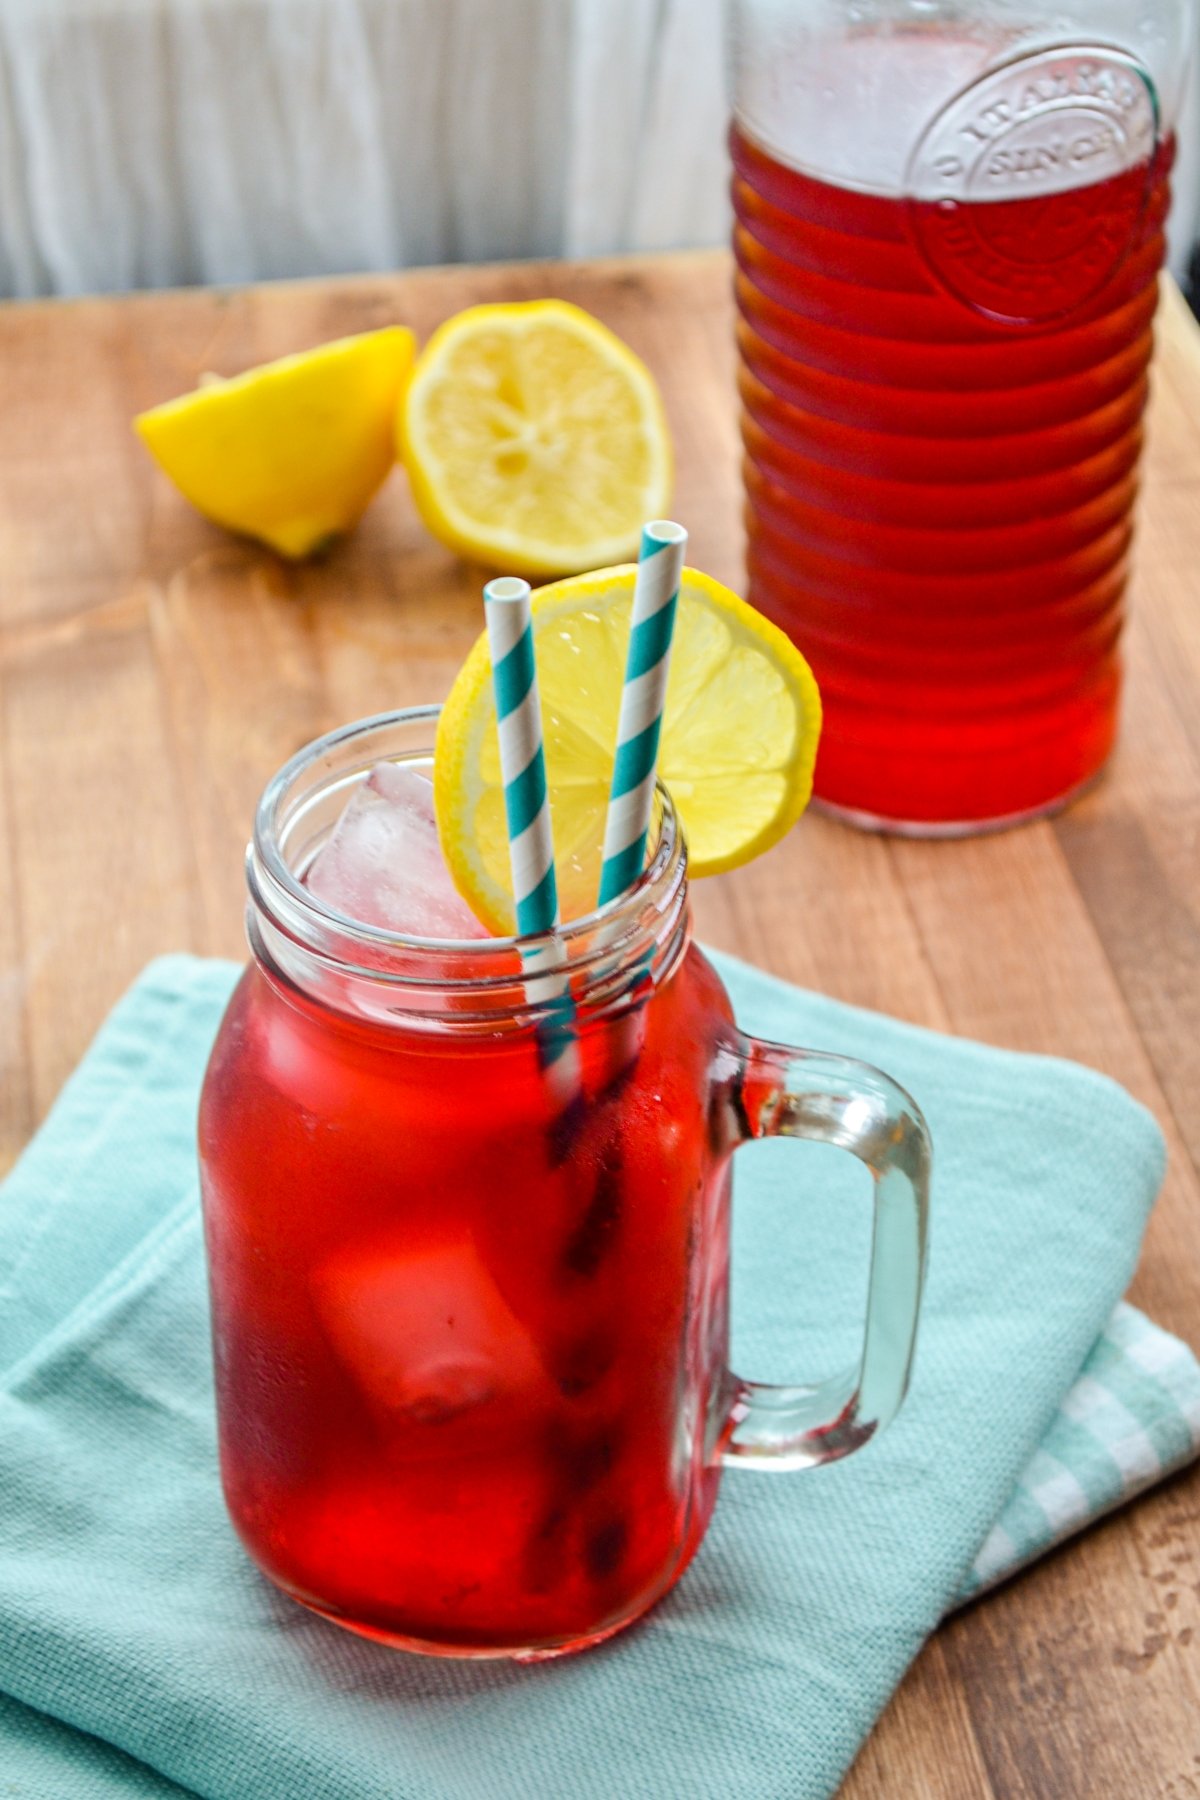 Passion tea lemonade, served with lemon wedges